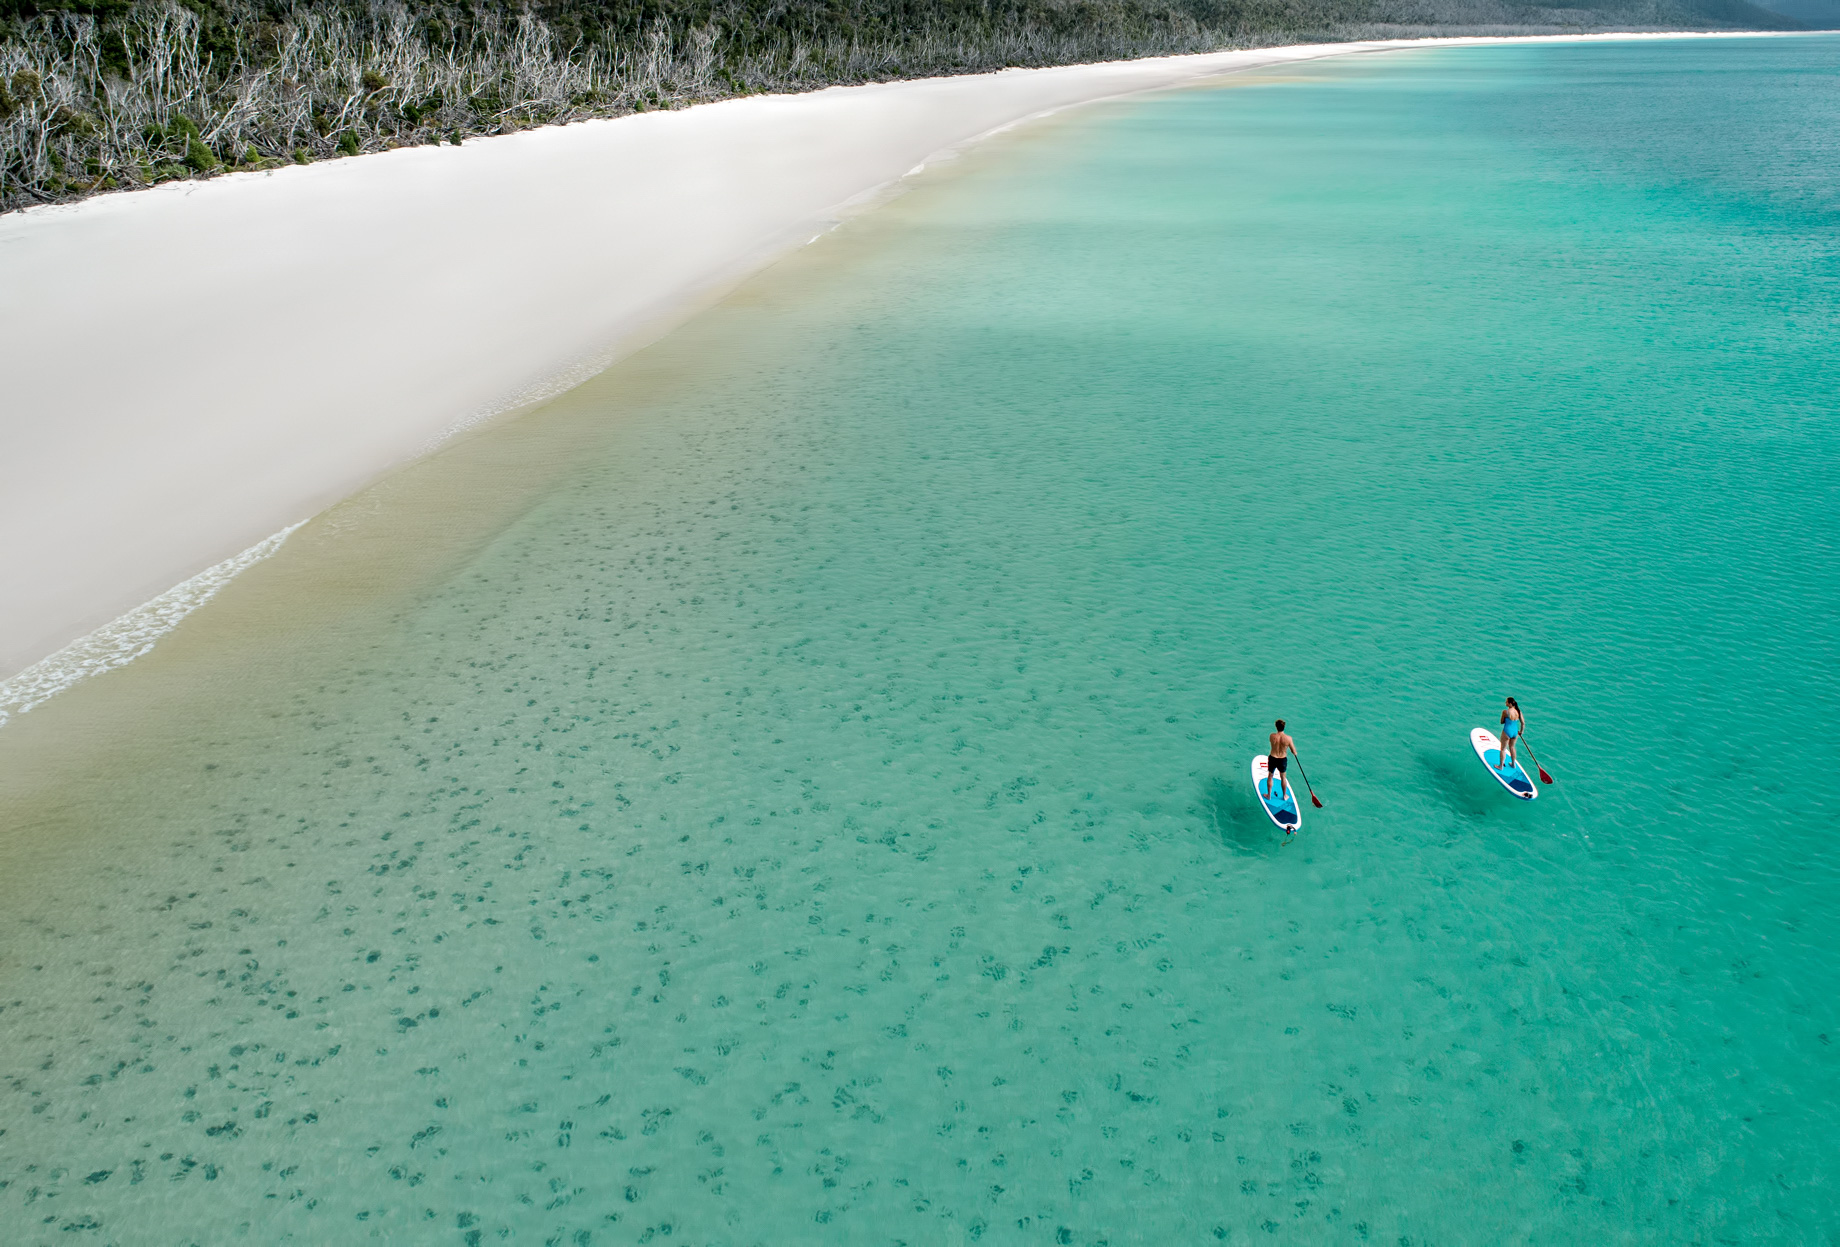 InterContinental Hayman Island Resort – Whitsunday Islands, Australia – Whitehaven Beach Paddle Boarding